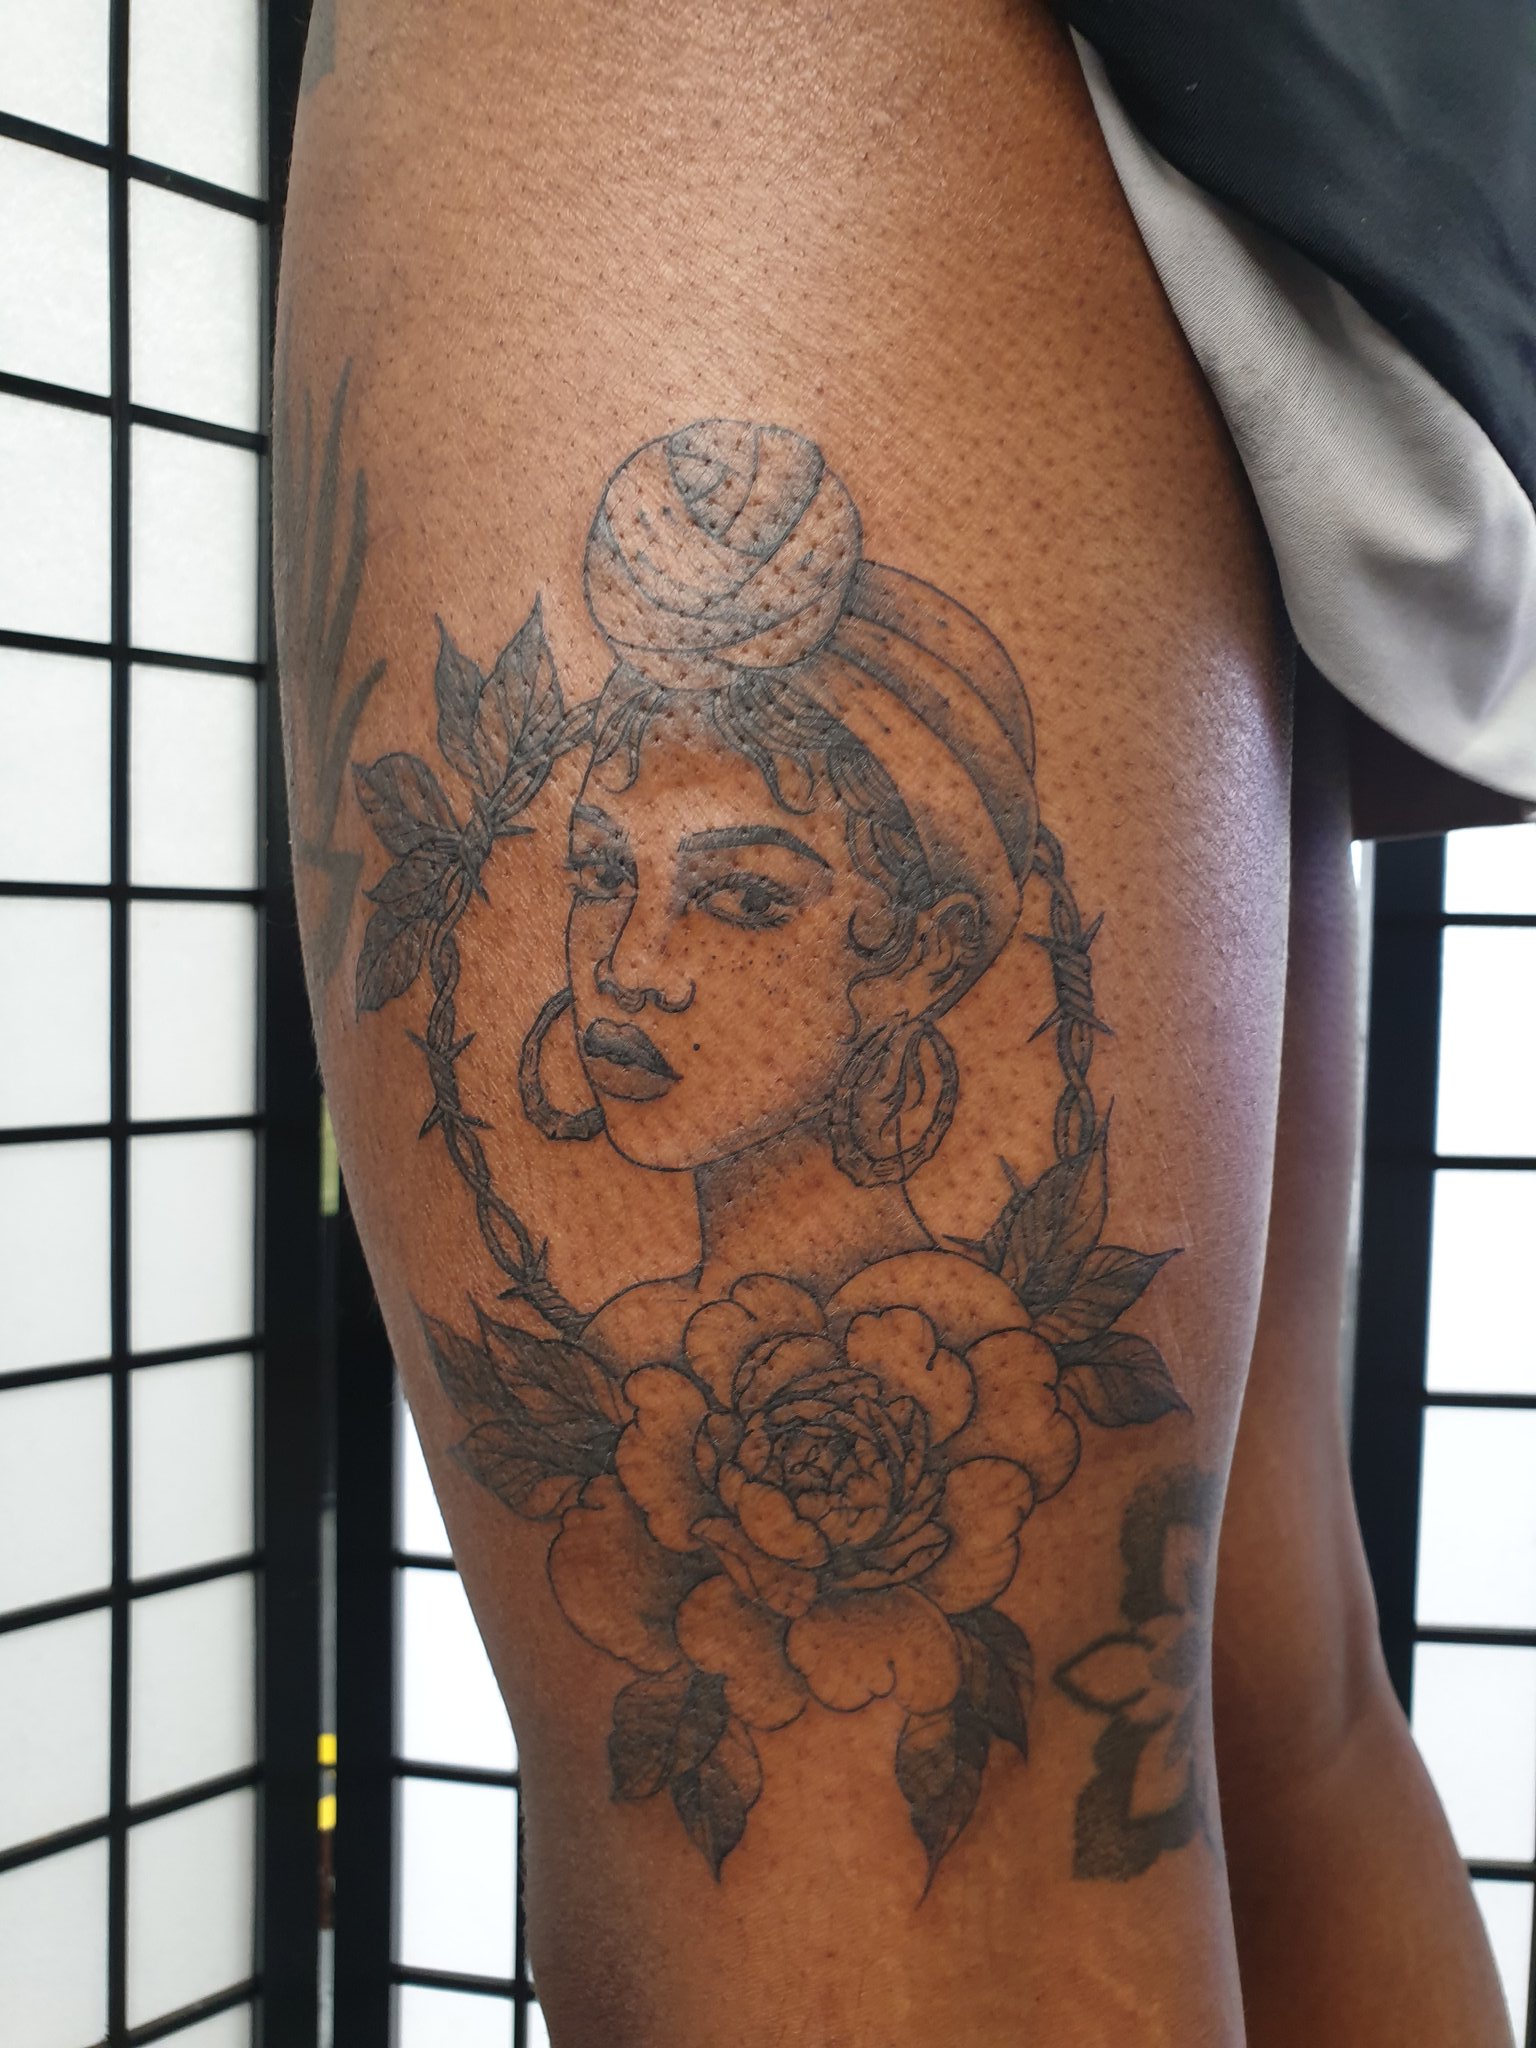 Clark Tattoos on X: "One of my favourite tattoos to date! BLACK GIRL MAGIC! #BlackGirlMagic #blackgirlsrock #BlackGirlsAreMagic #tattoo #tattoos #tattooart #tattooartist #blacktattooartist #blackworktattoo #tattooing #tattoodesign #tattooartist ...